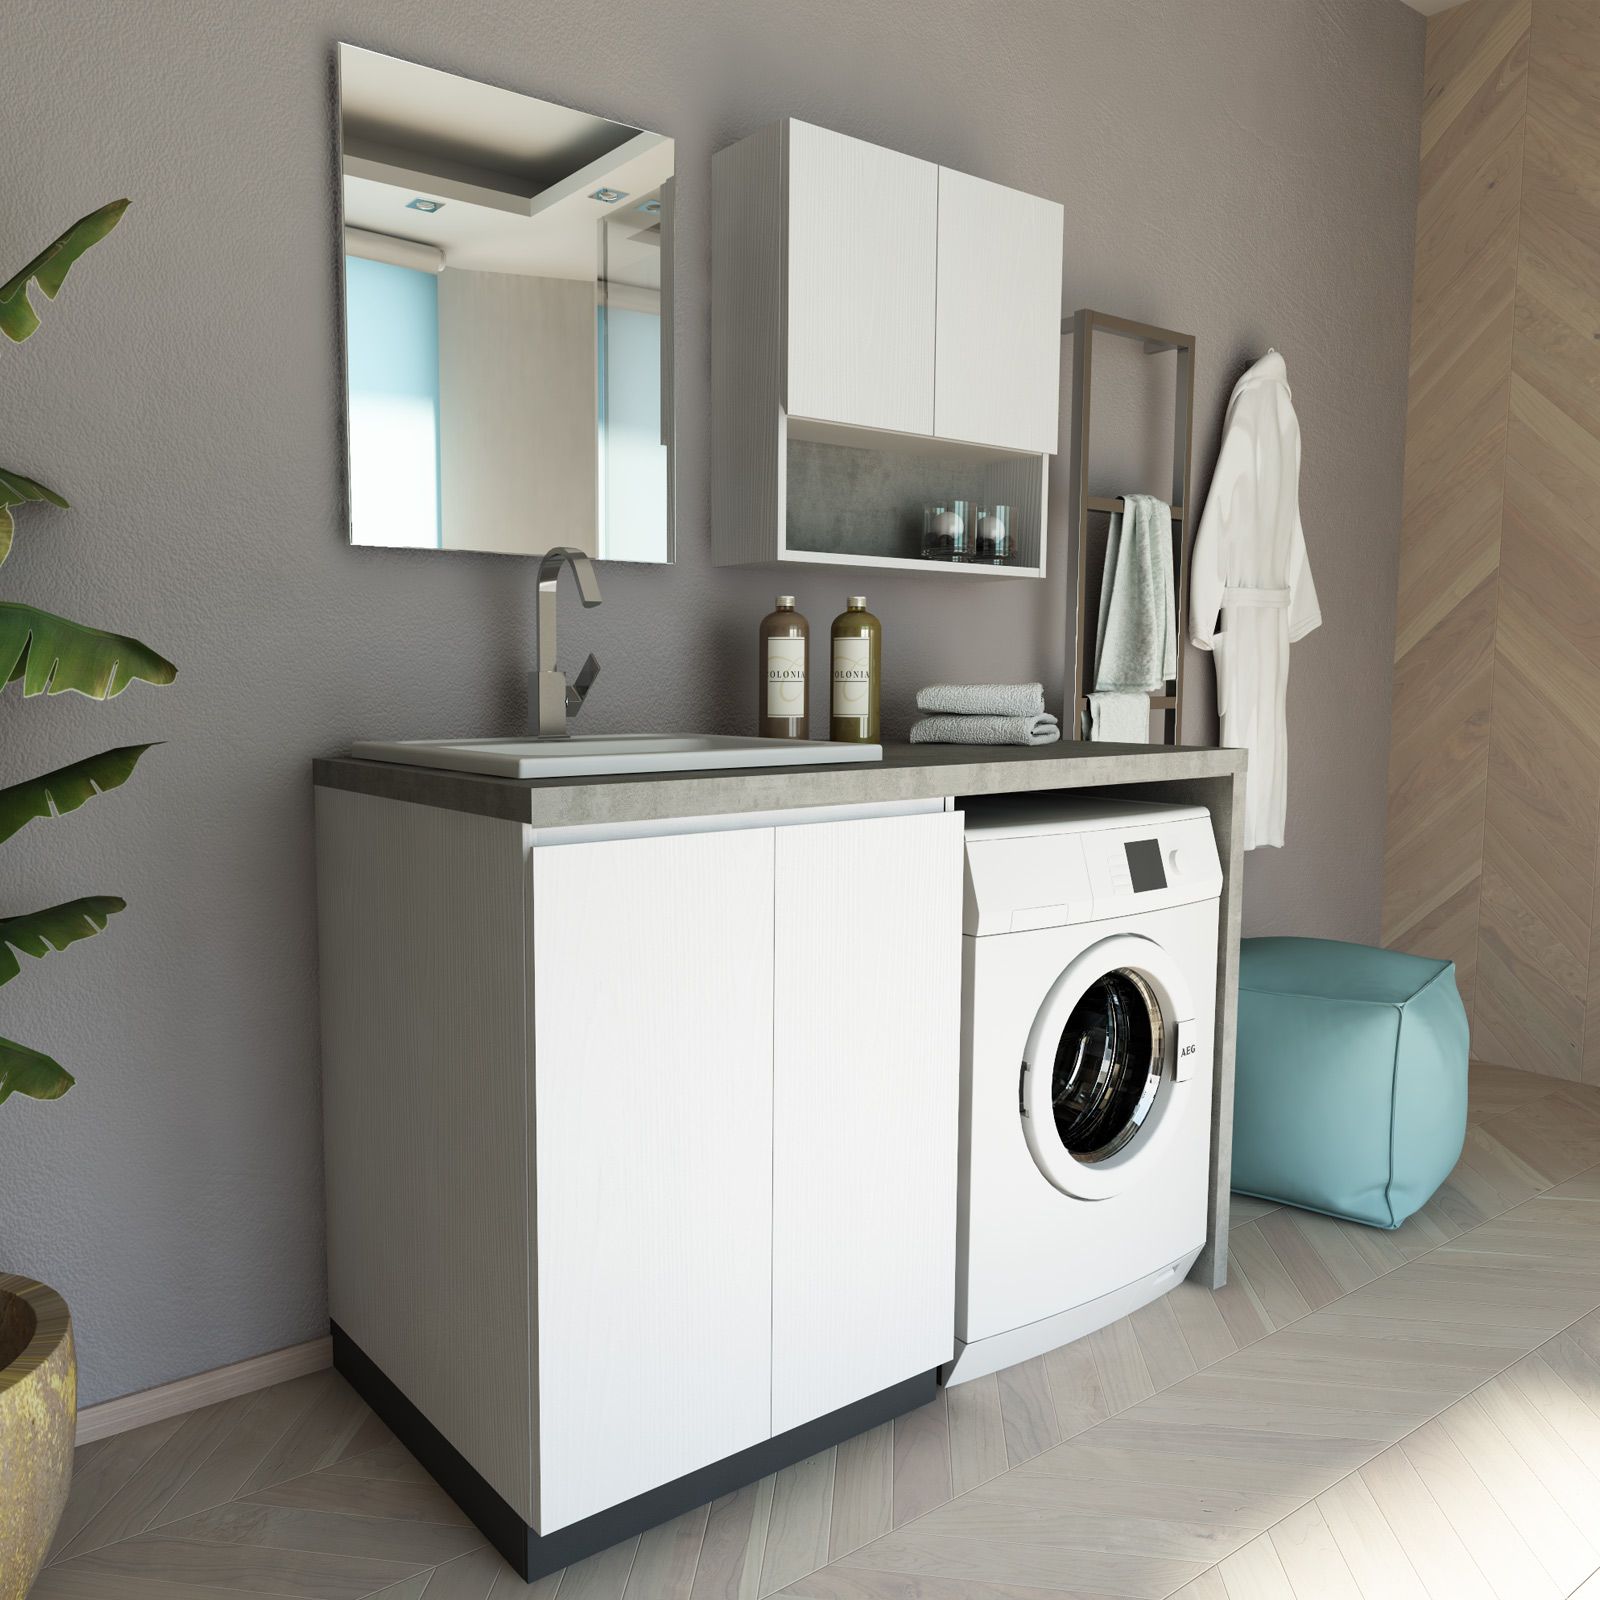 https://assets.deghi.it/_p/aft/webp/originali/mobile-lavanderia-140-cm-con-lavabo-sx-pensile-e-copri-lavatrice-bianco-e-frassino-vicky-1.jpeg